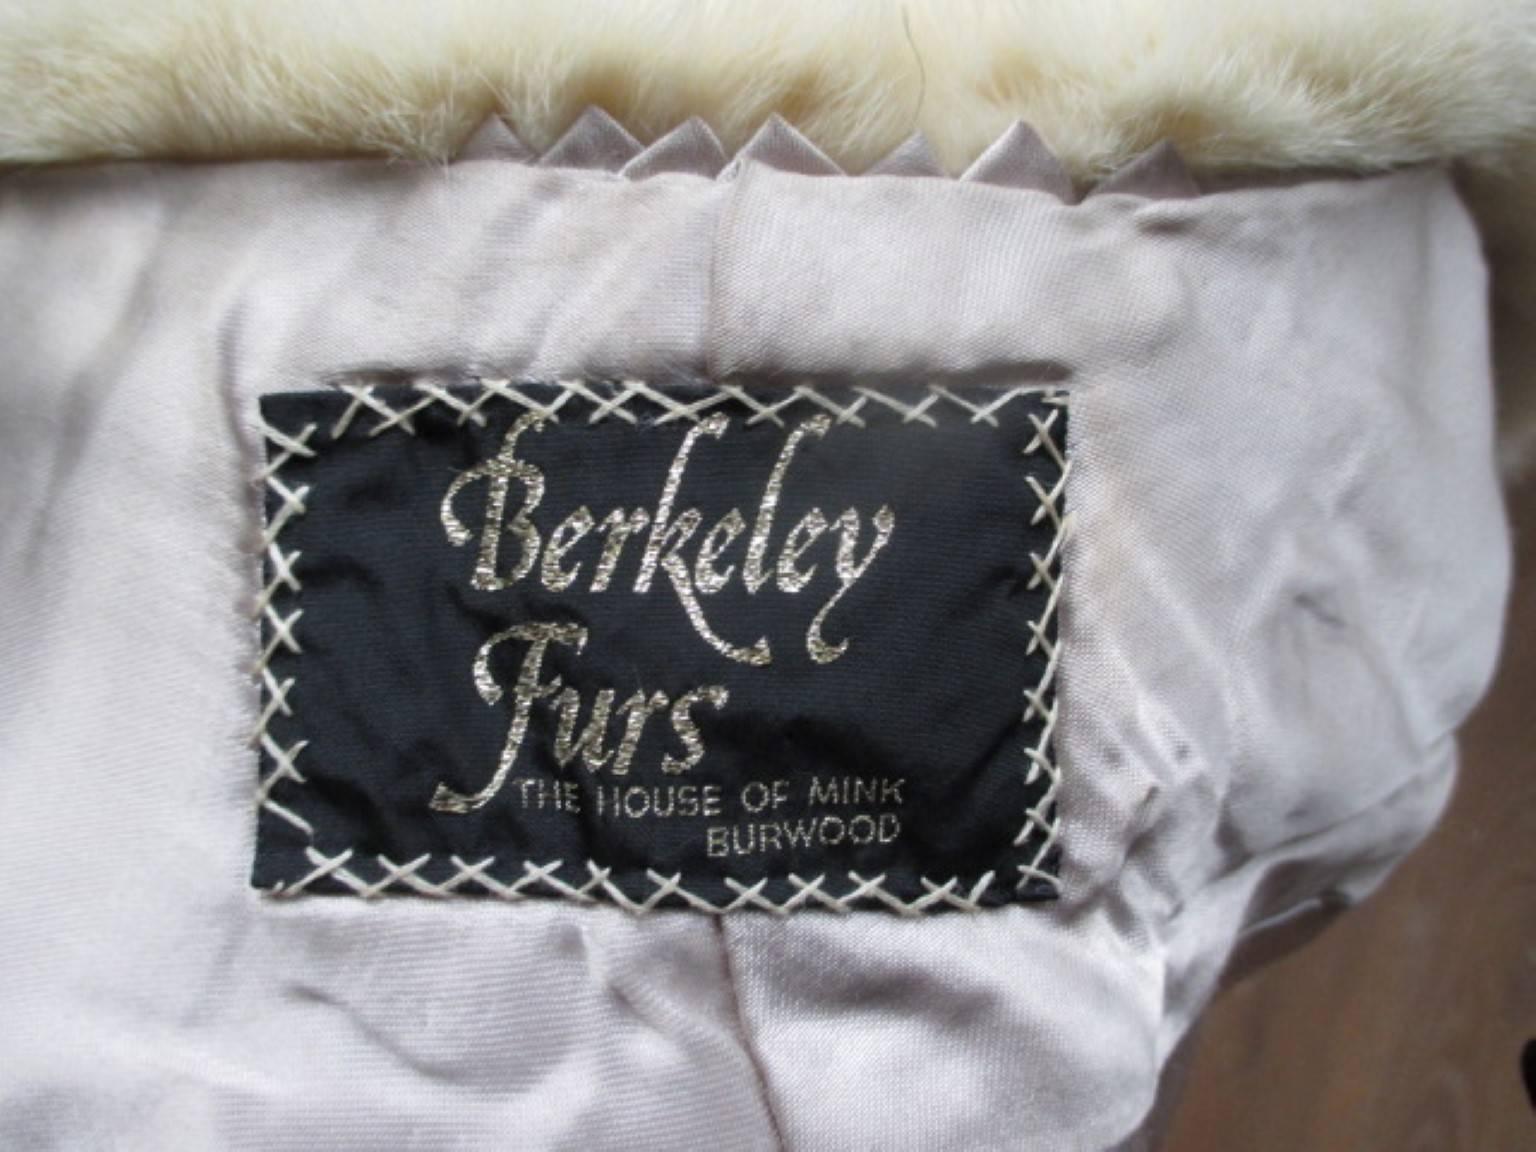 berkeley furs the house of mink burwood